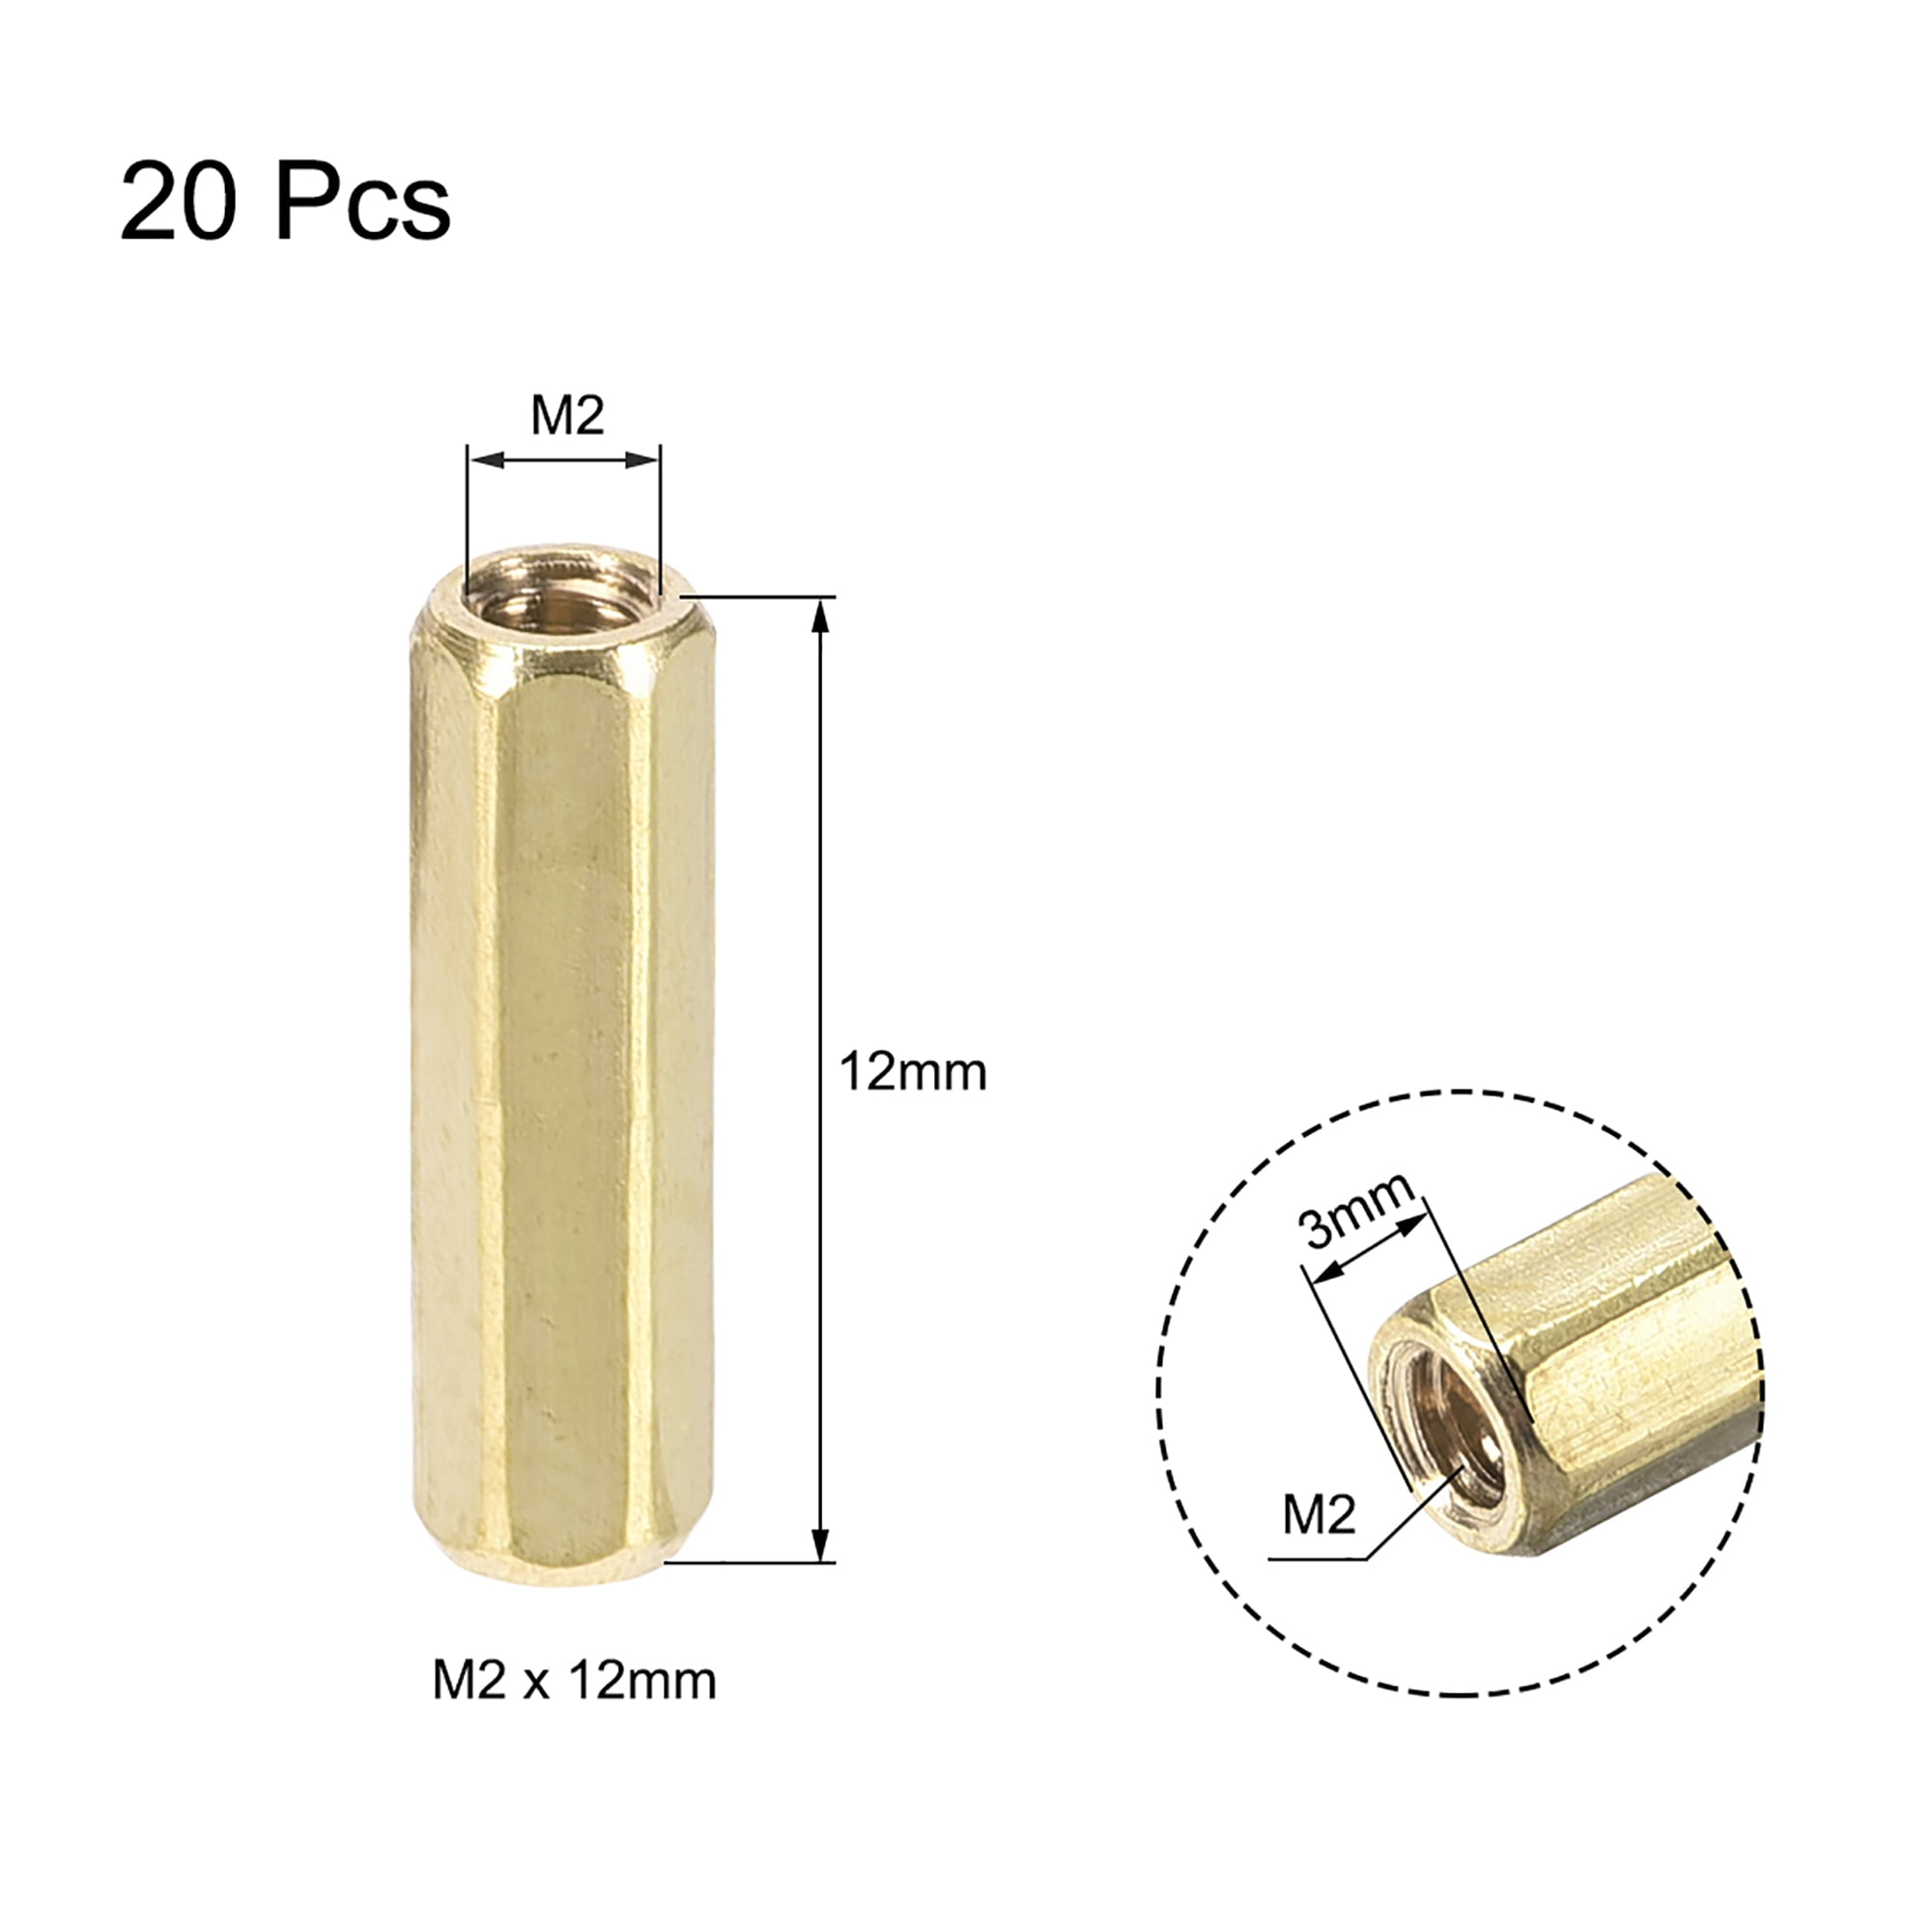 M2 x 12mm Female to Female Hex Brass Spacer Standoff 20pcs 